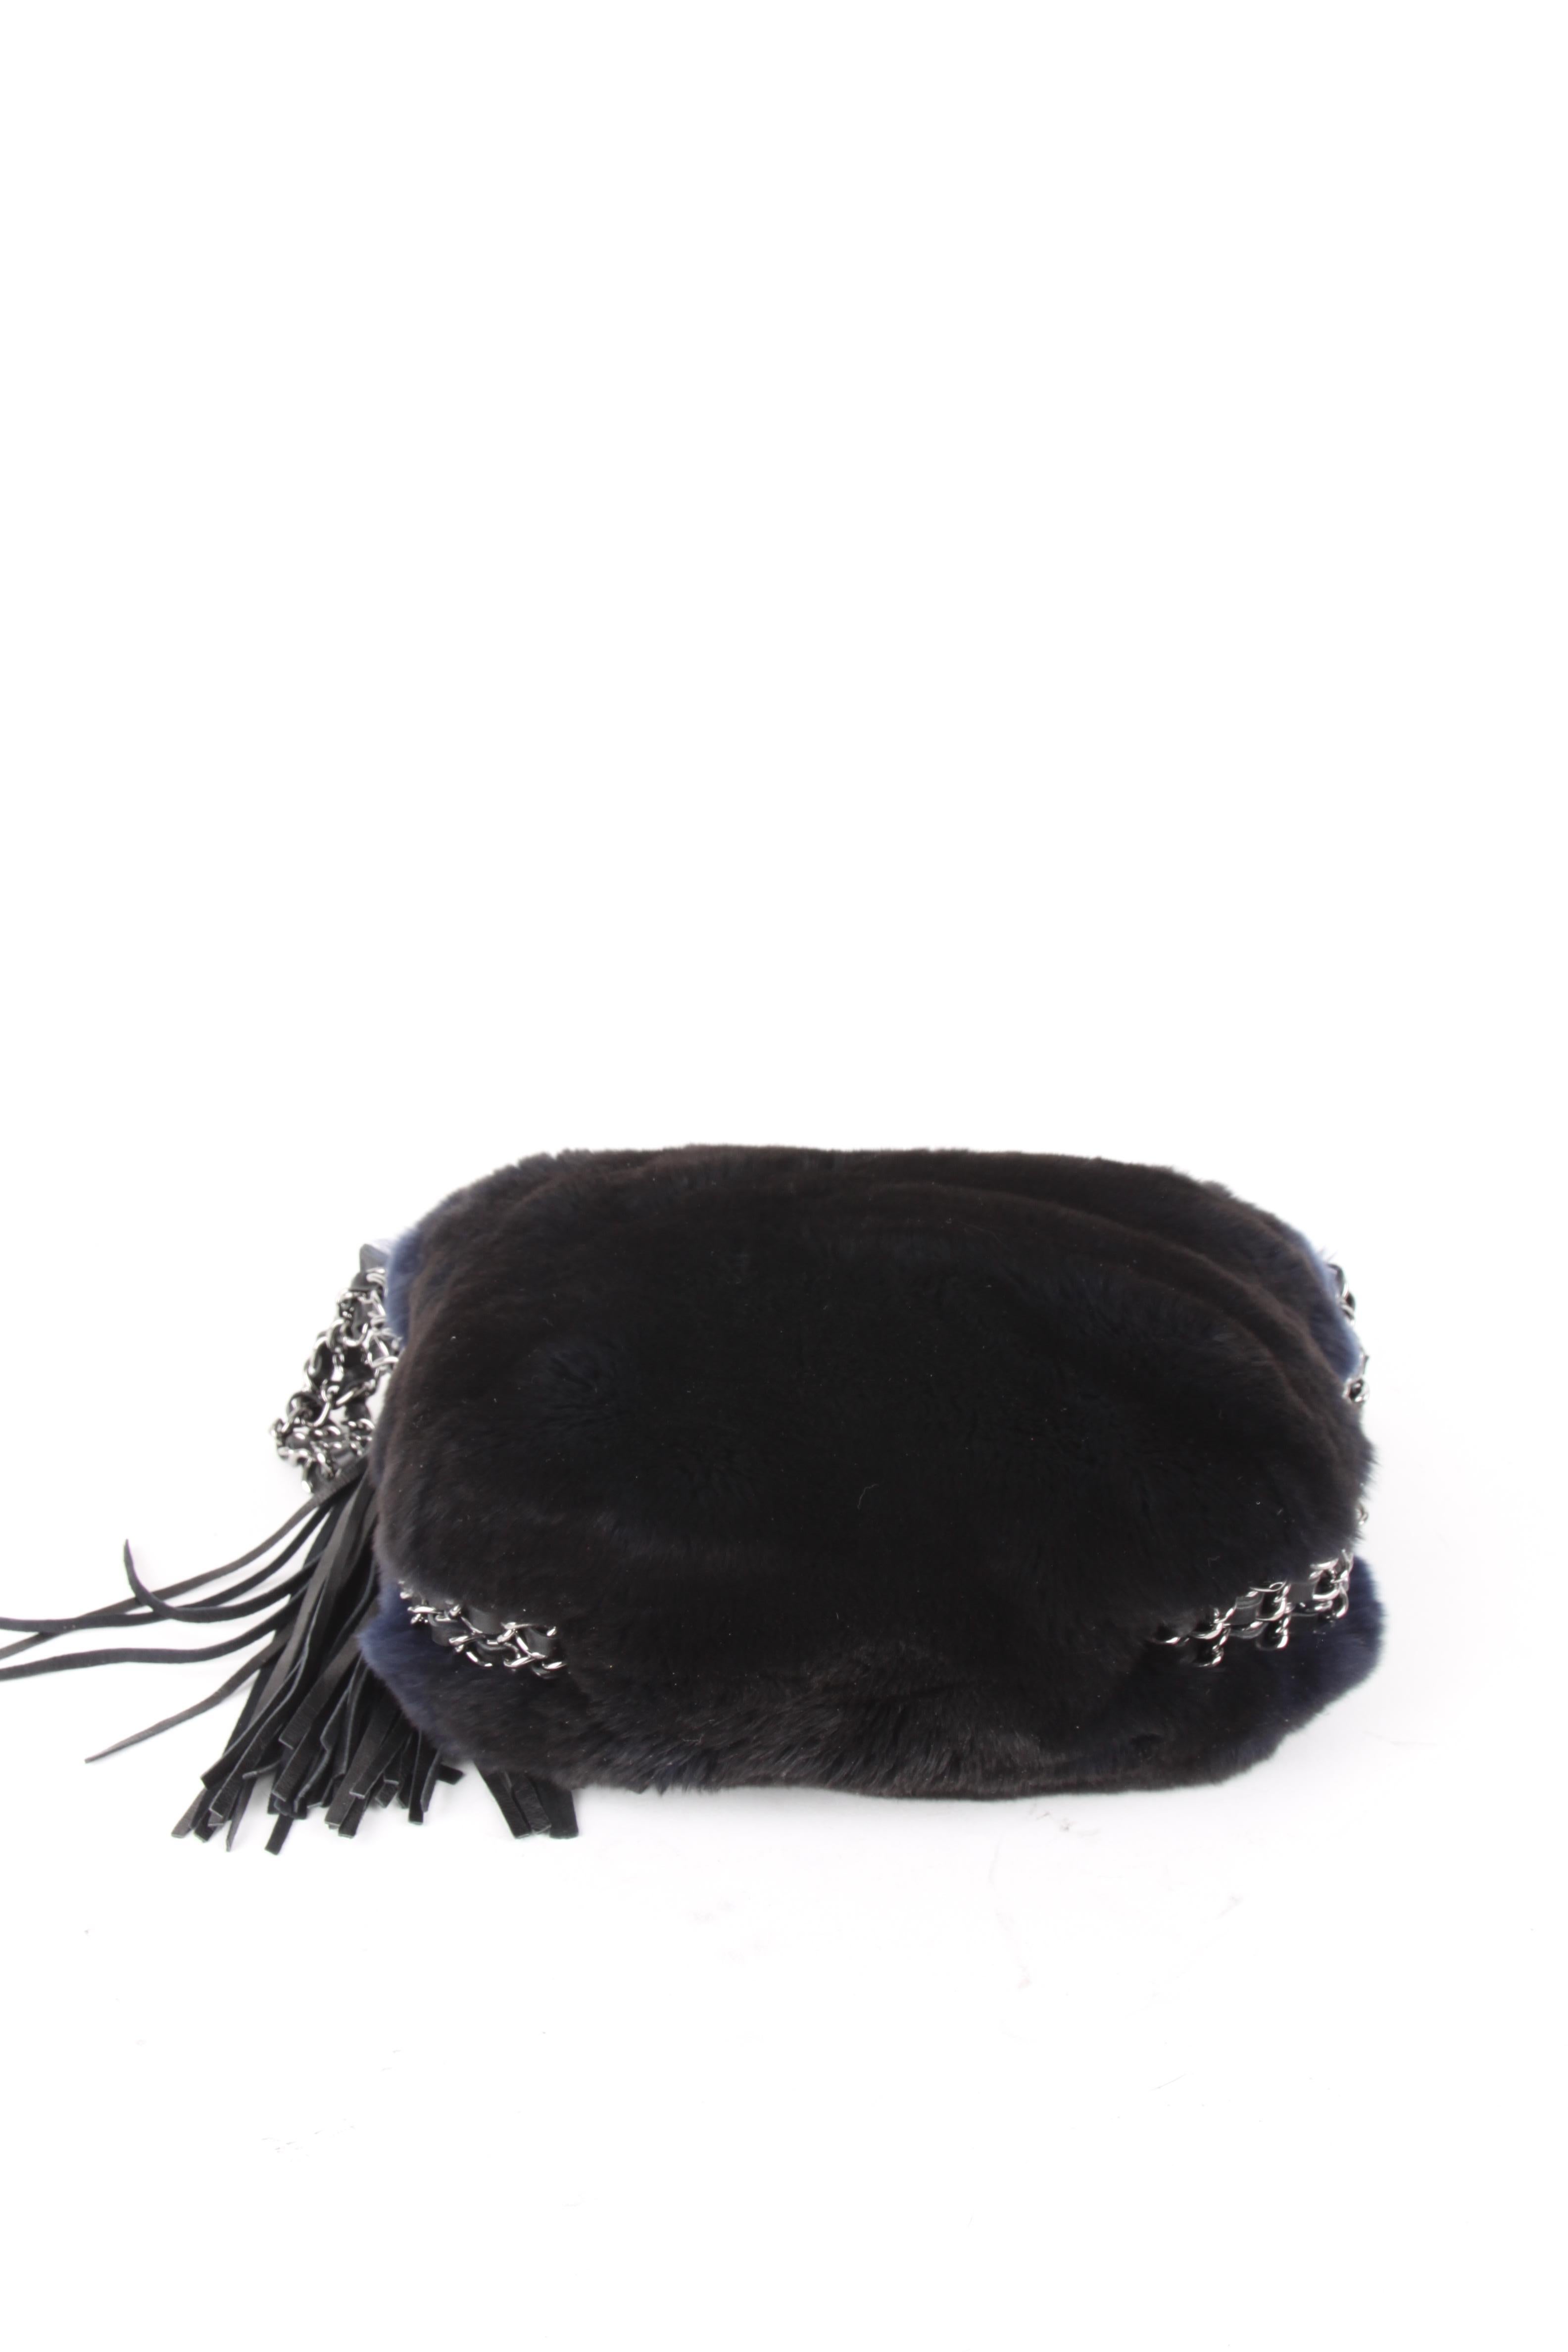 Chanel Blue Rabbit Fur Leather Three Chain Shoulder Handbag For Sale 5